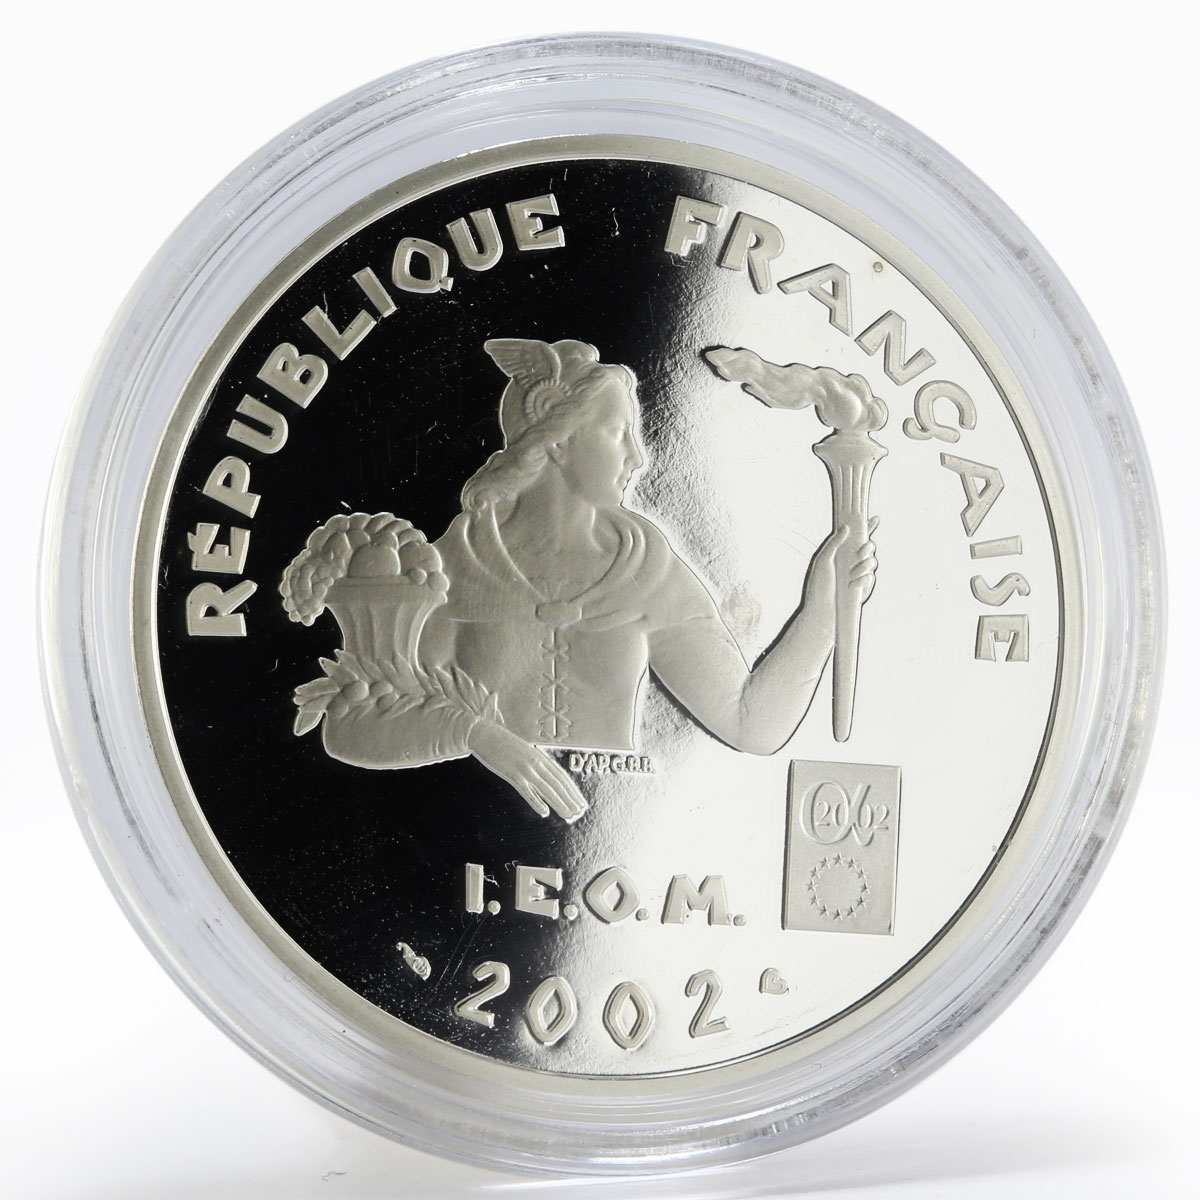 French Polynesia 200 franc Moorea Island silver proof coin 2002